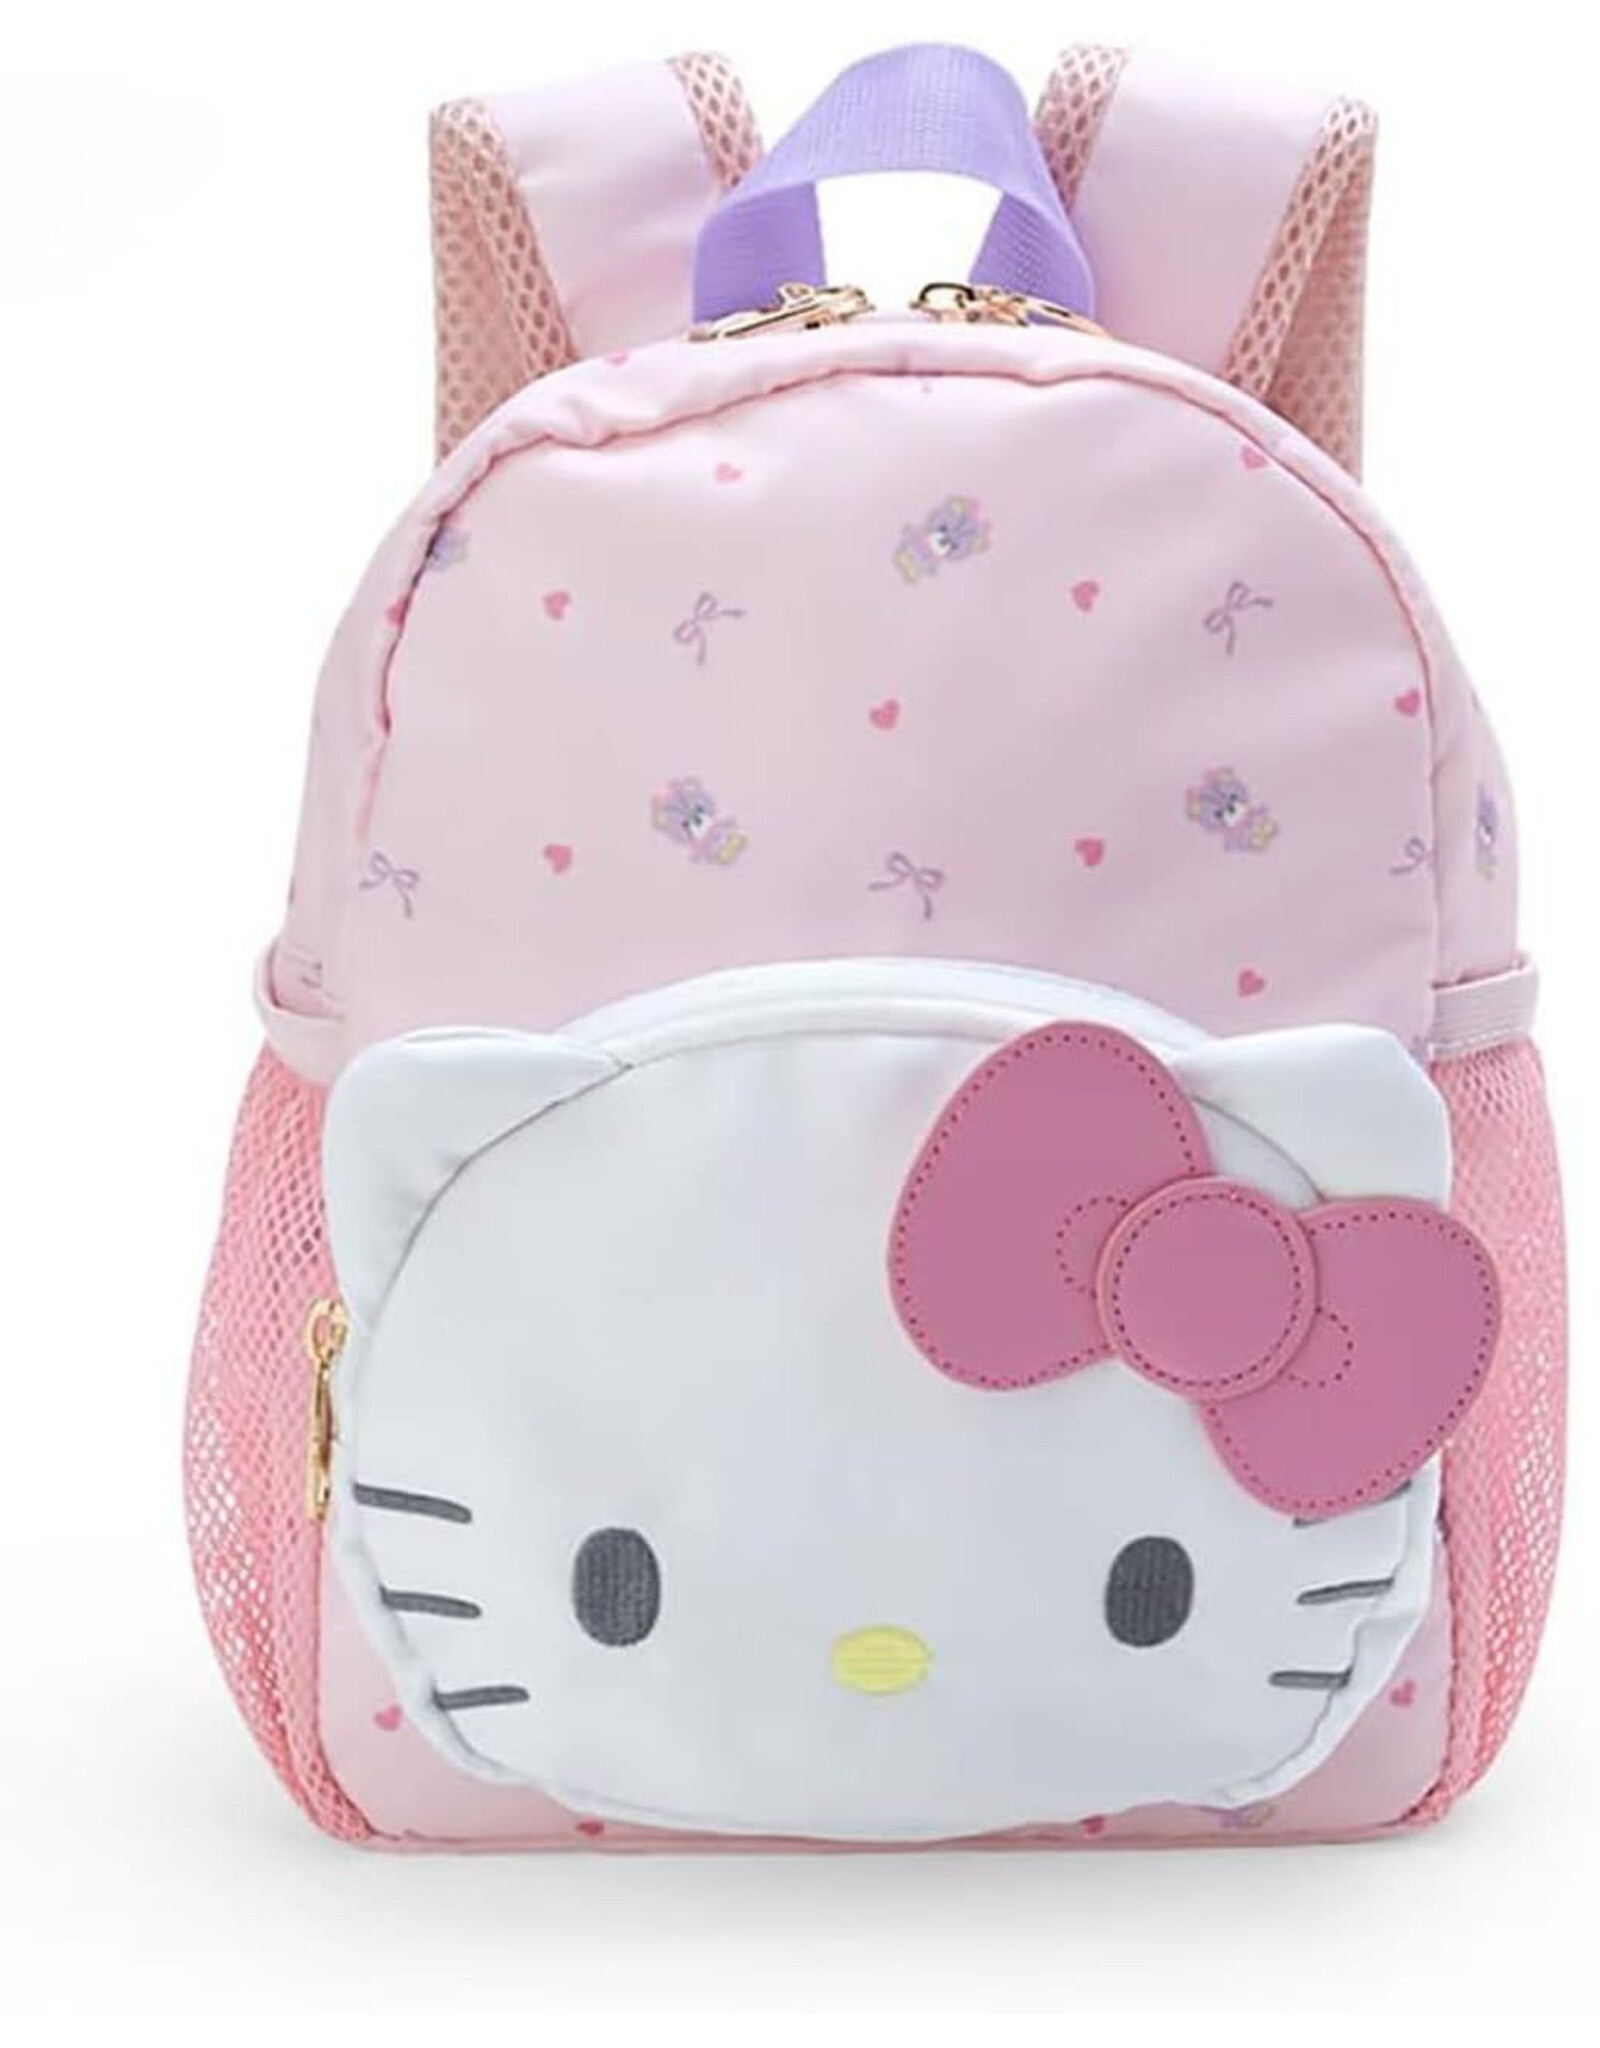 Sanrio Mini Backpack Hello Kitty